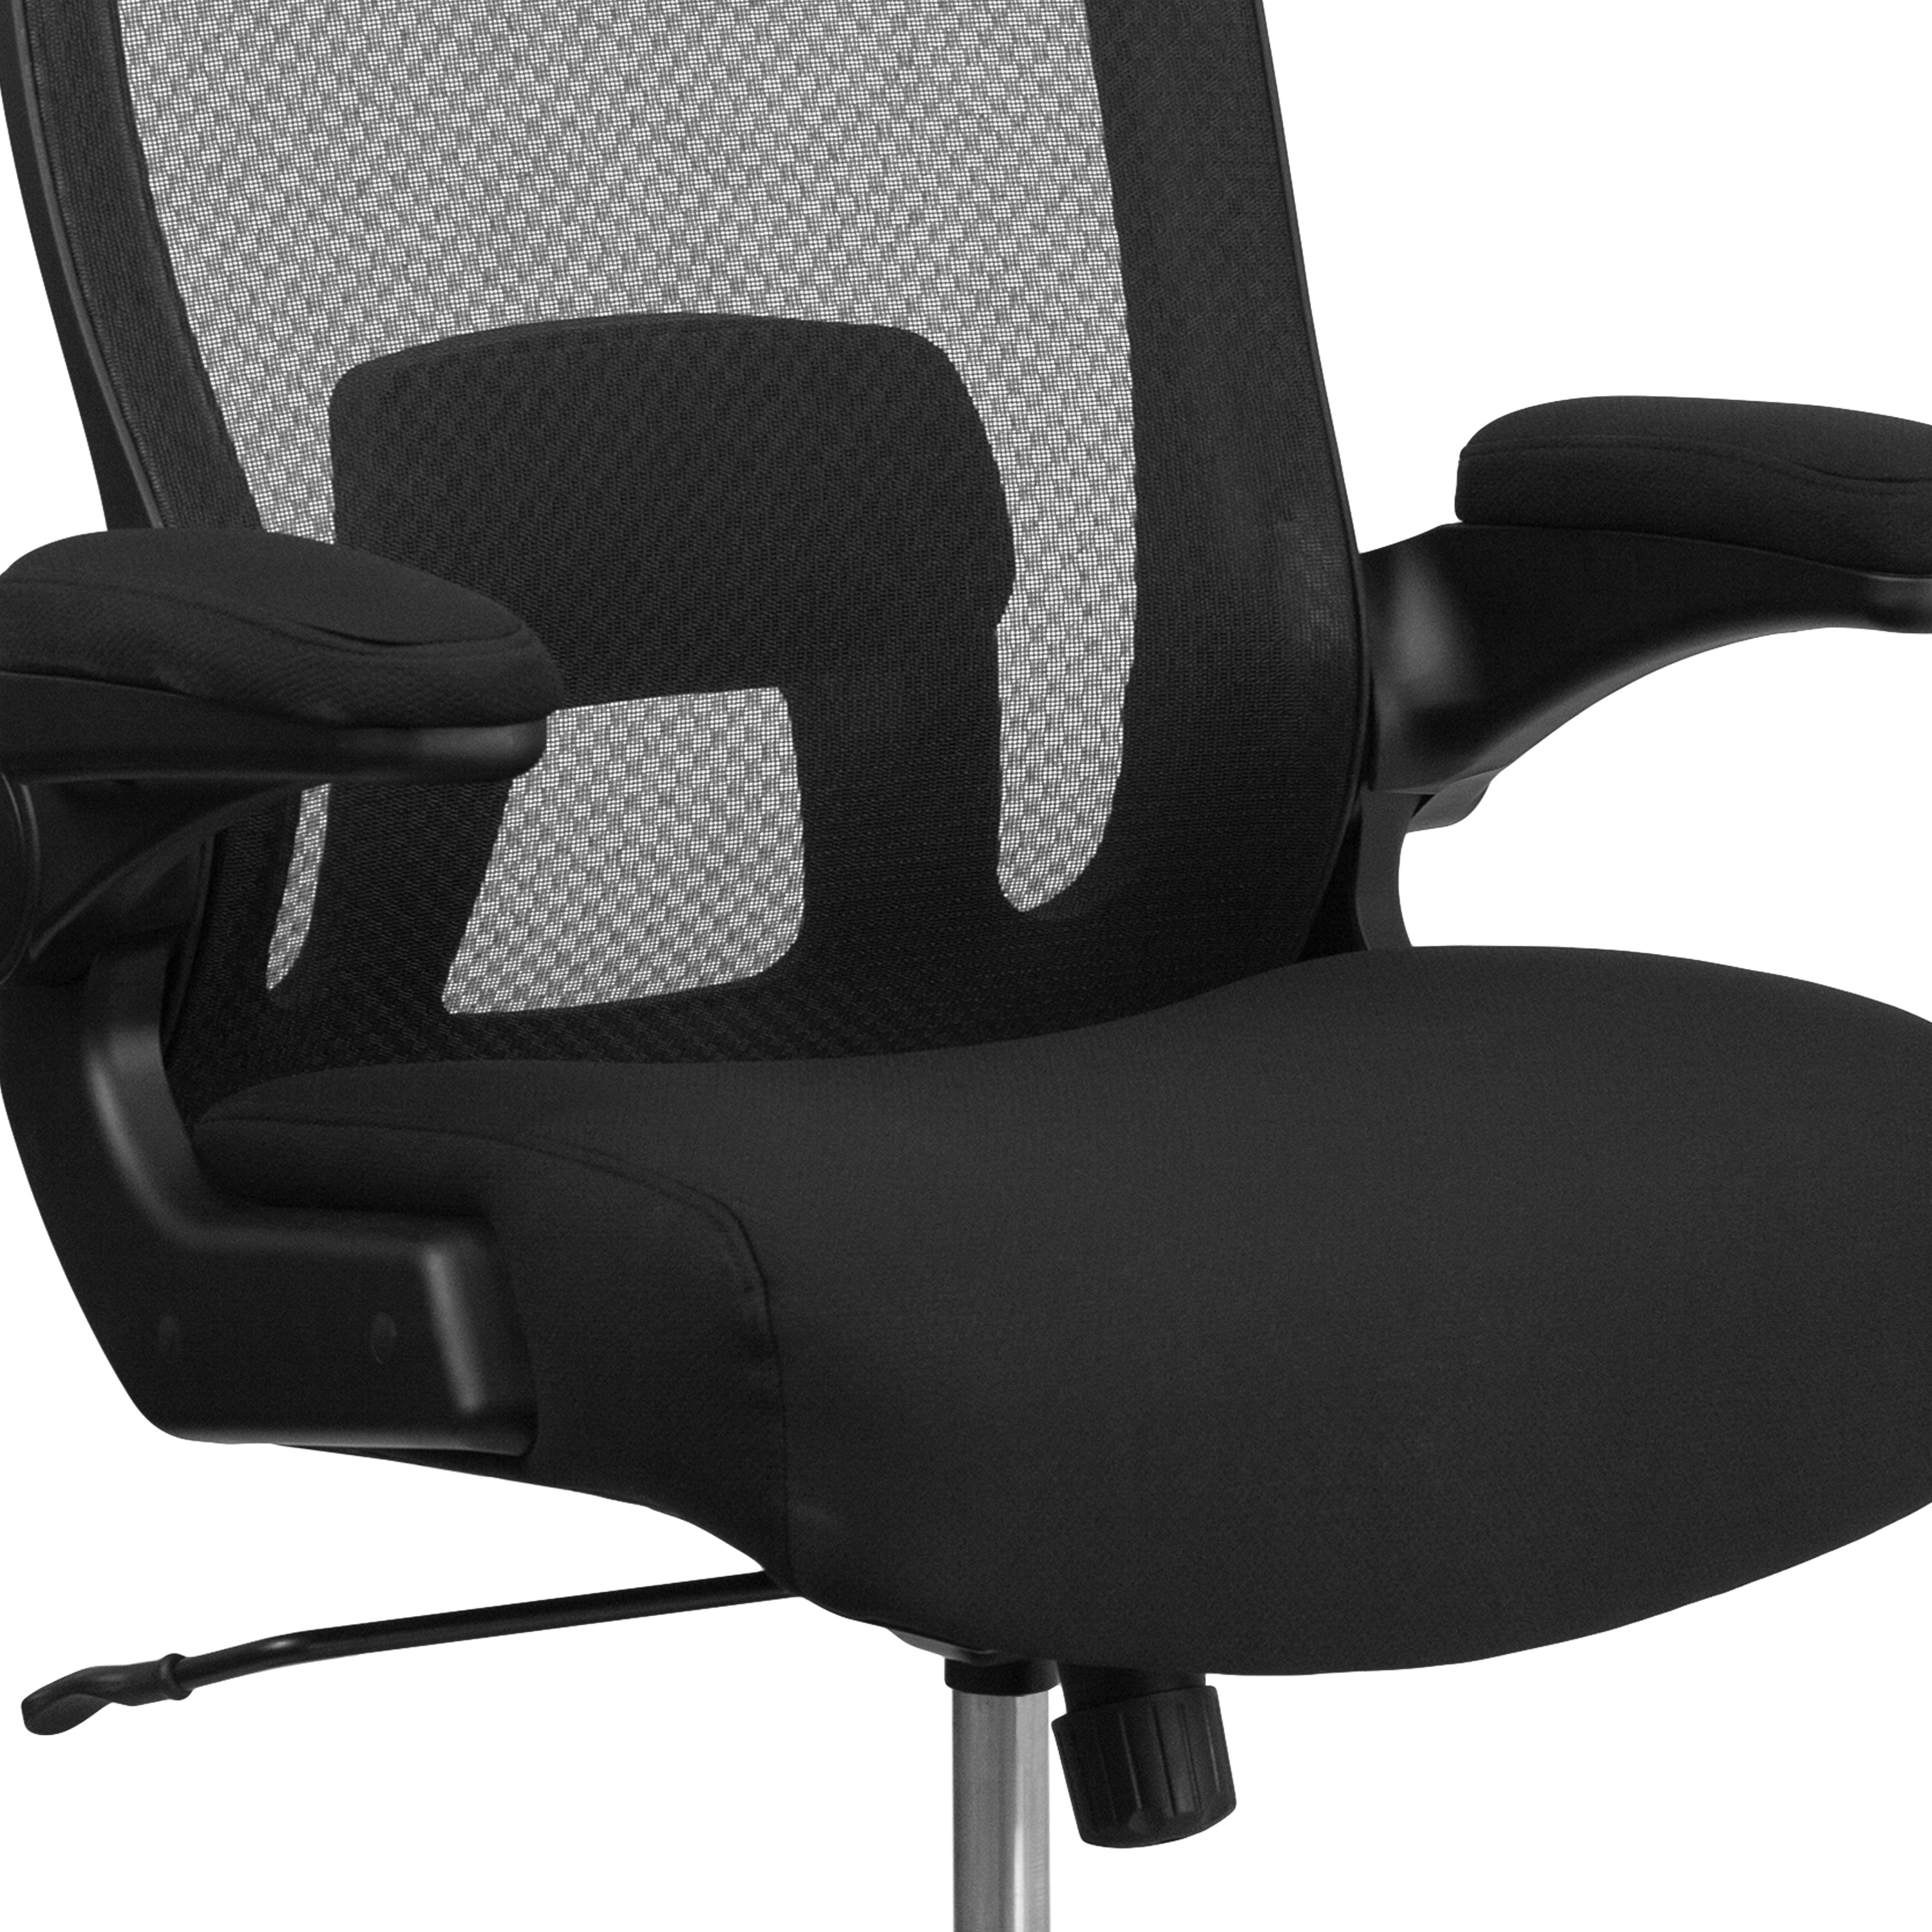 HERCULES Series Big & Tall 500 lb. Rated Mesh Executive Swivel Ergonomic Office Chair with Adjustable Lumbar-Big & Tall Office Chair-Flash Furniture-Wall2Wall Furnishings